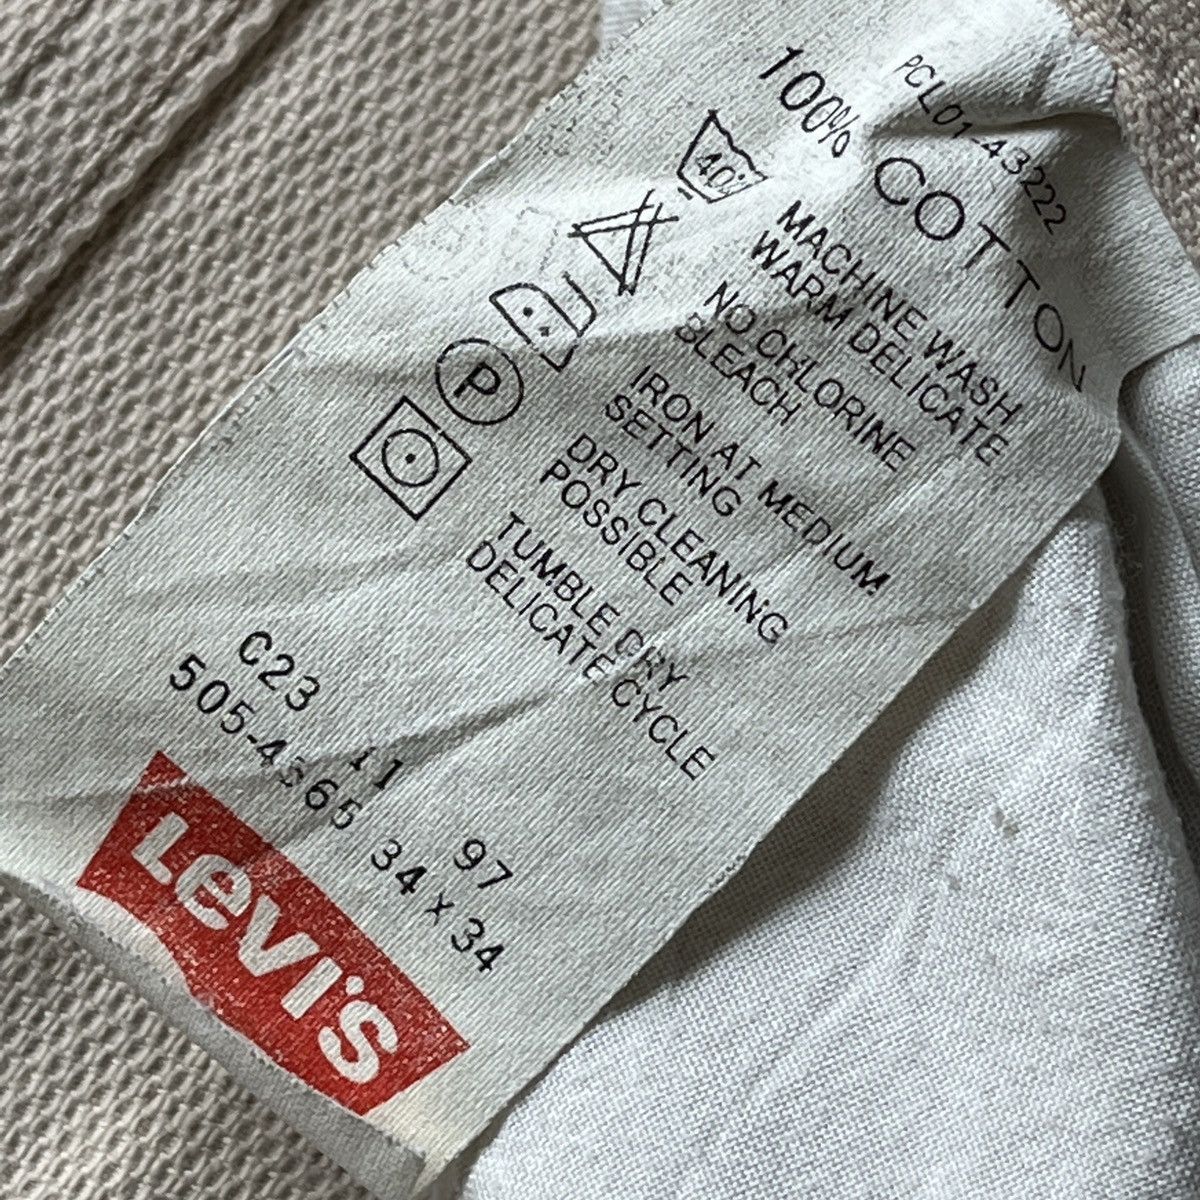 Levi's 505 Vintage Clothing Denim Distressed Ripped - 7